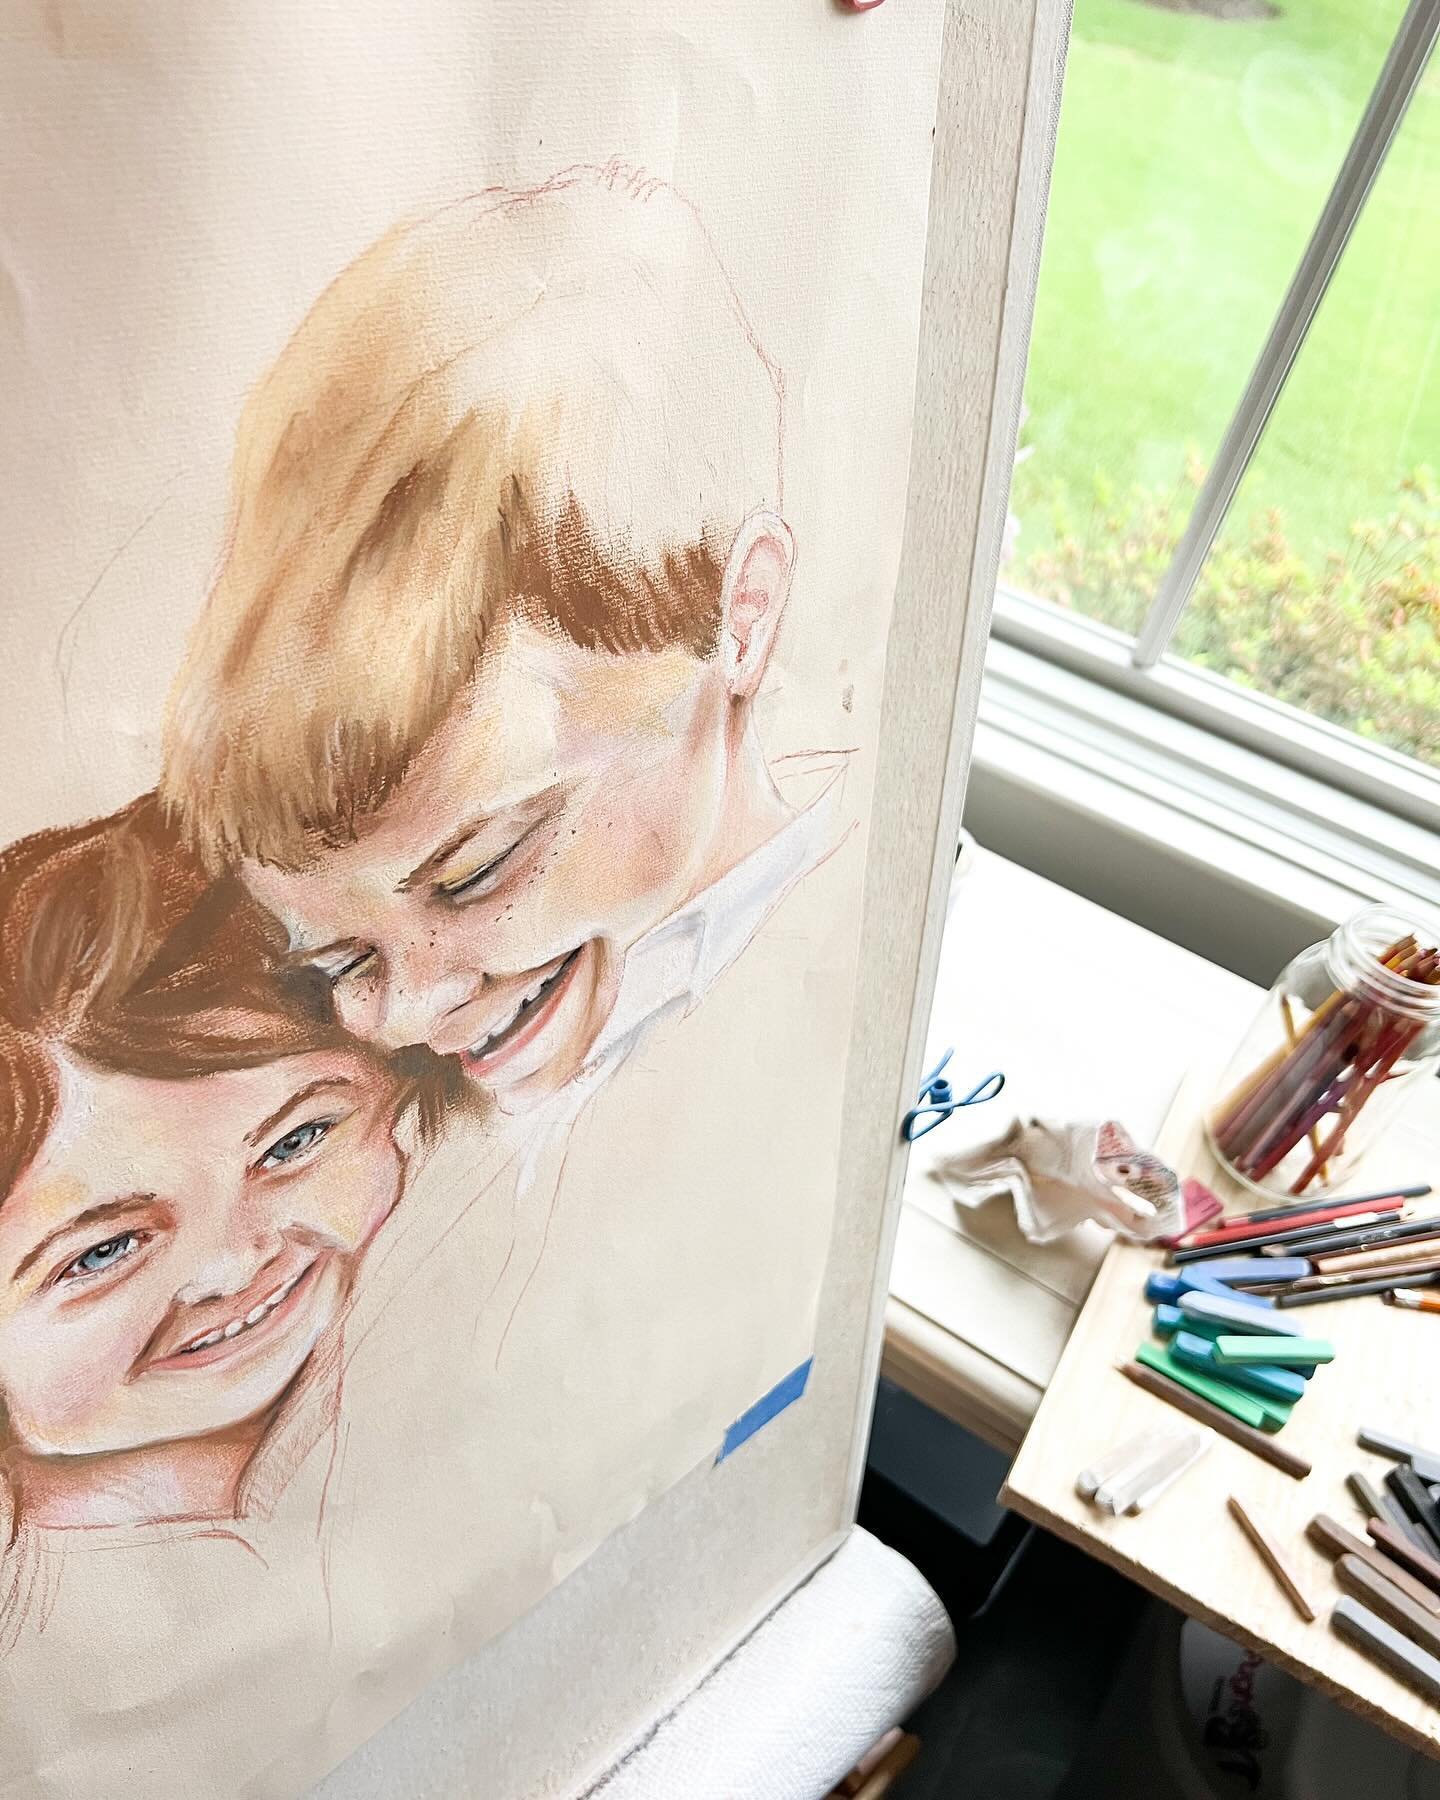 Chalk pastel portraits are rapidly becoming a favorite 🥹
&bull;
#ellywisestudios&nbsp;#creativehappylife #colorfulpaint #chalk #chalkpastel #illustration #vibrant #painter #painting #momdesigner #portrait #chalkpastelportrait